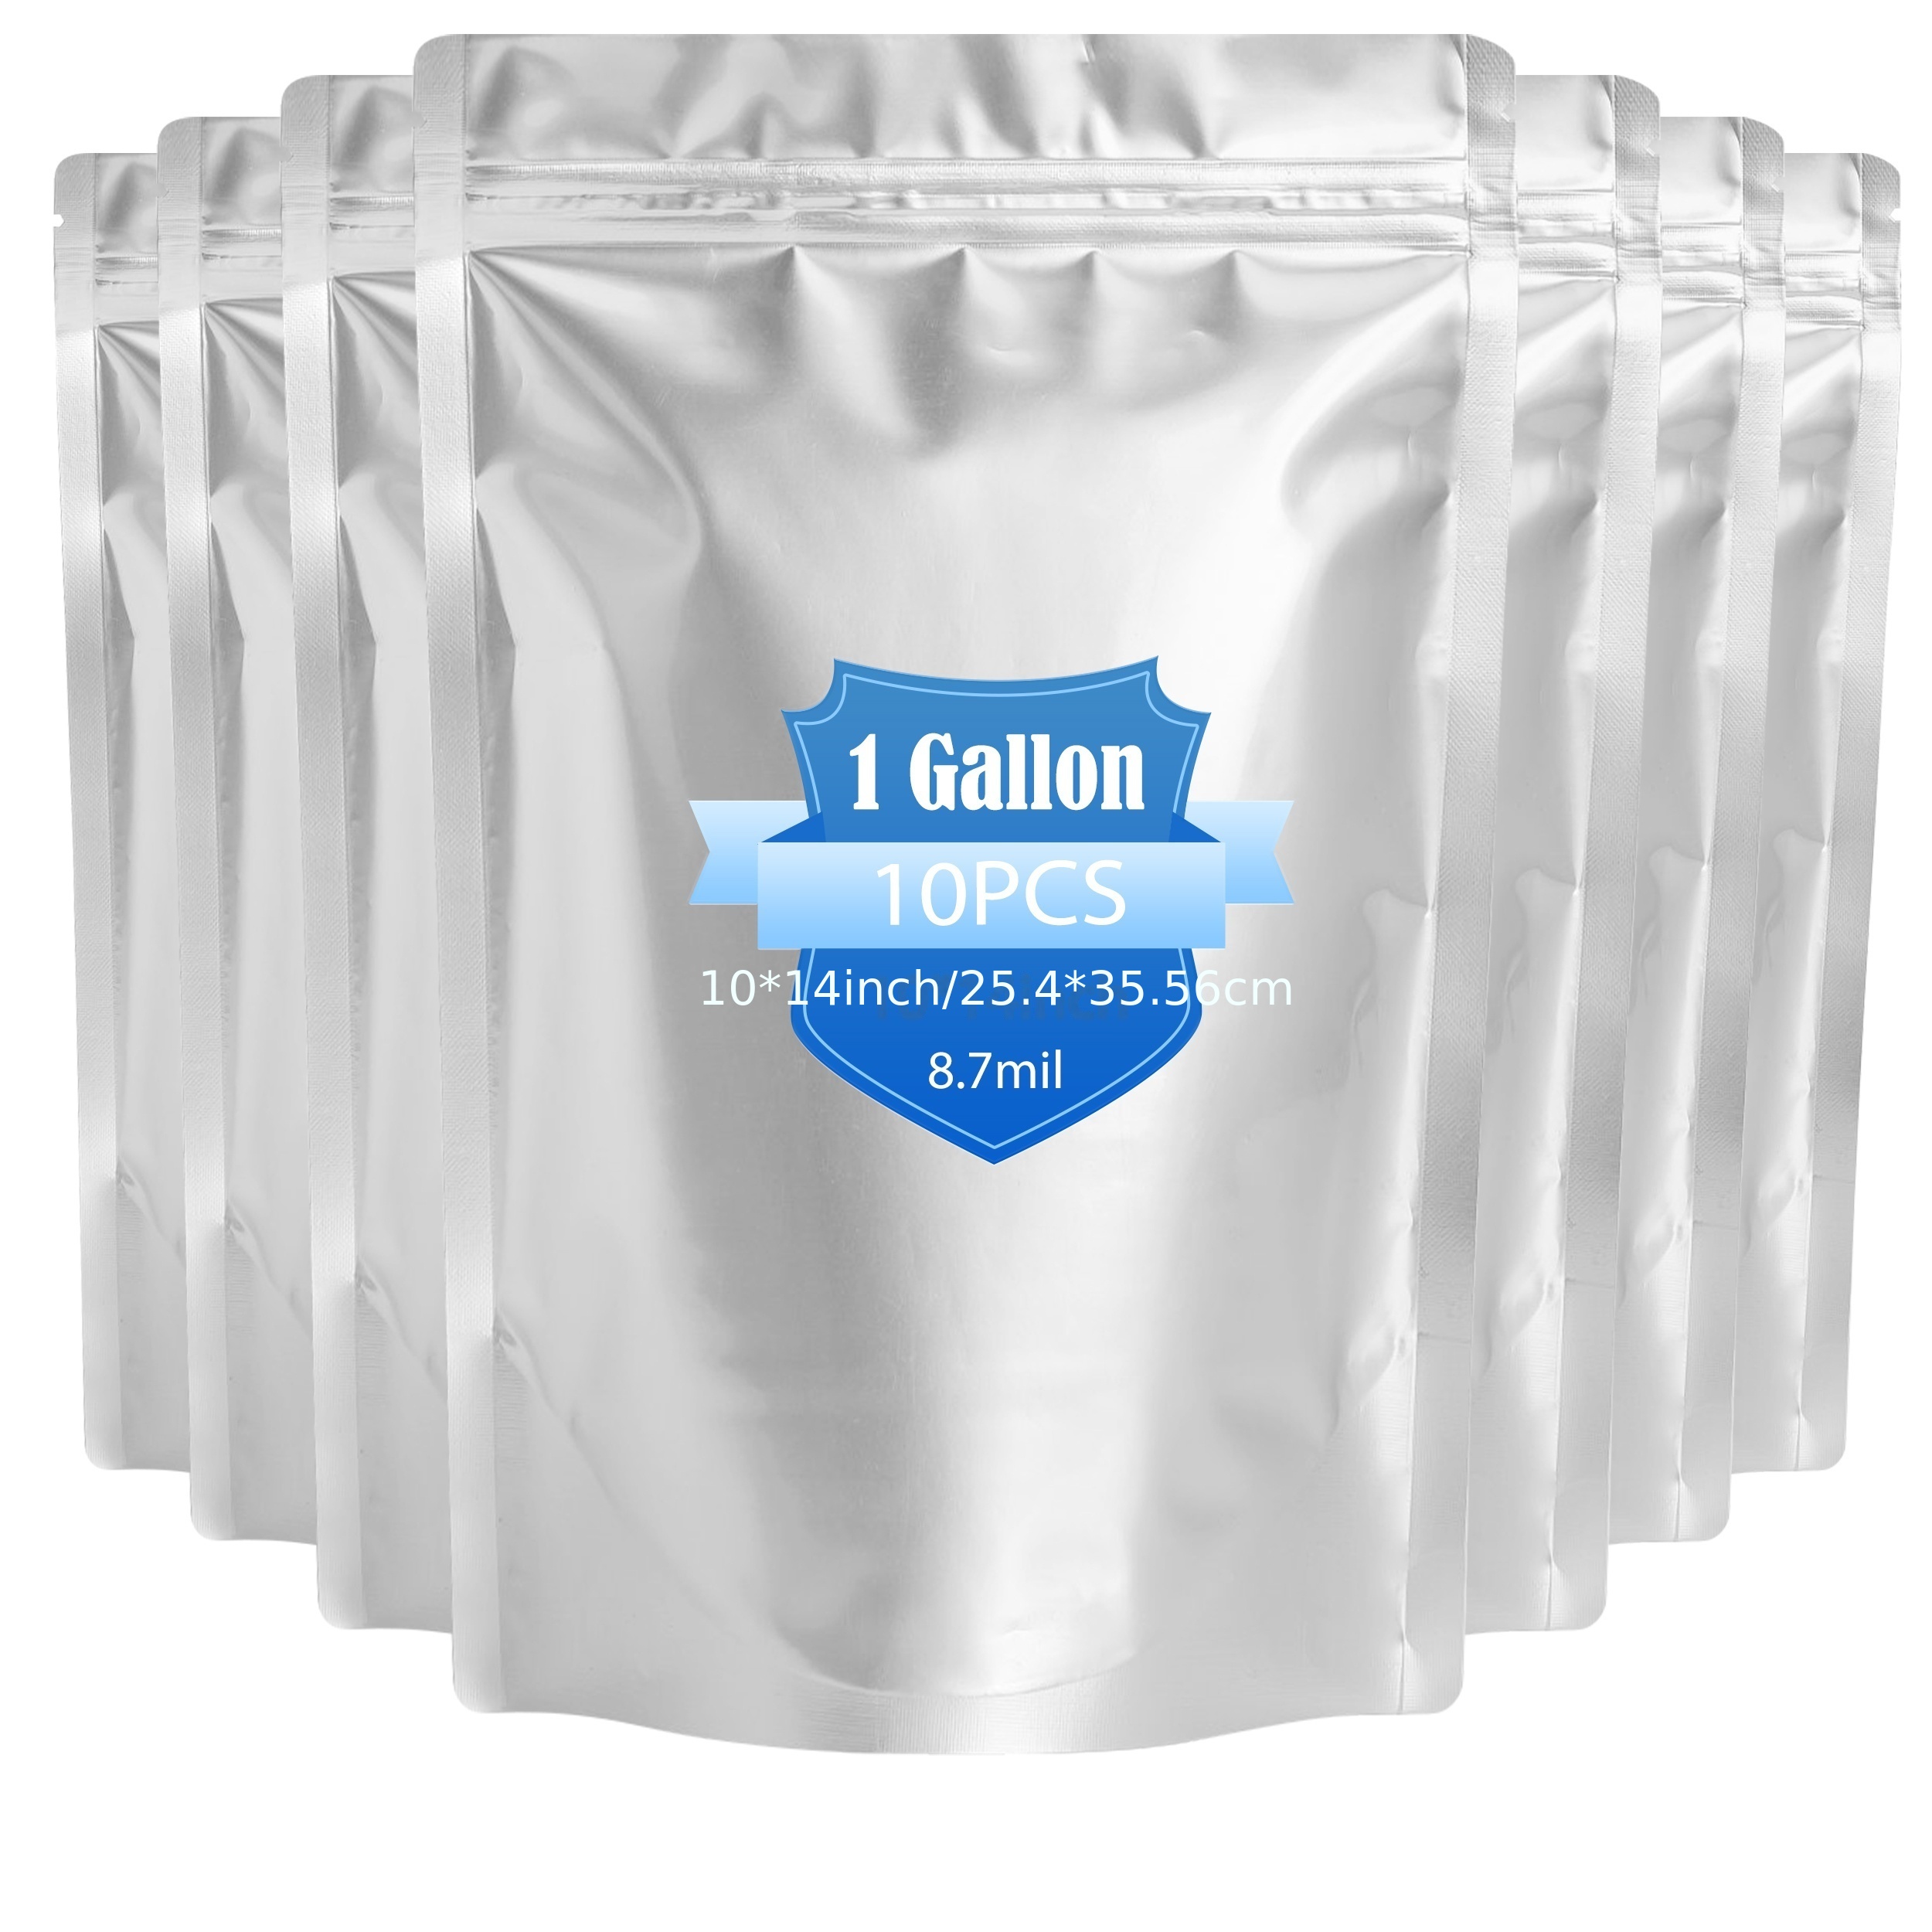  10pcs 5 Gallon Mylar Food Storage Bags - 10 Mil Thick